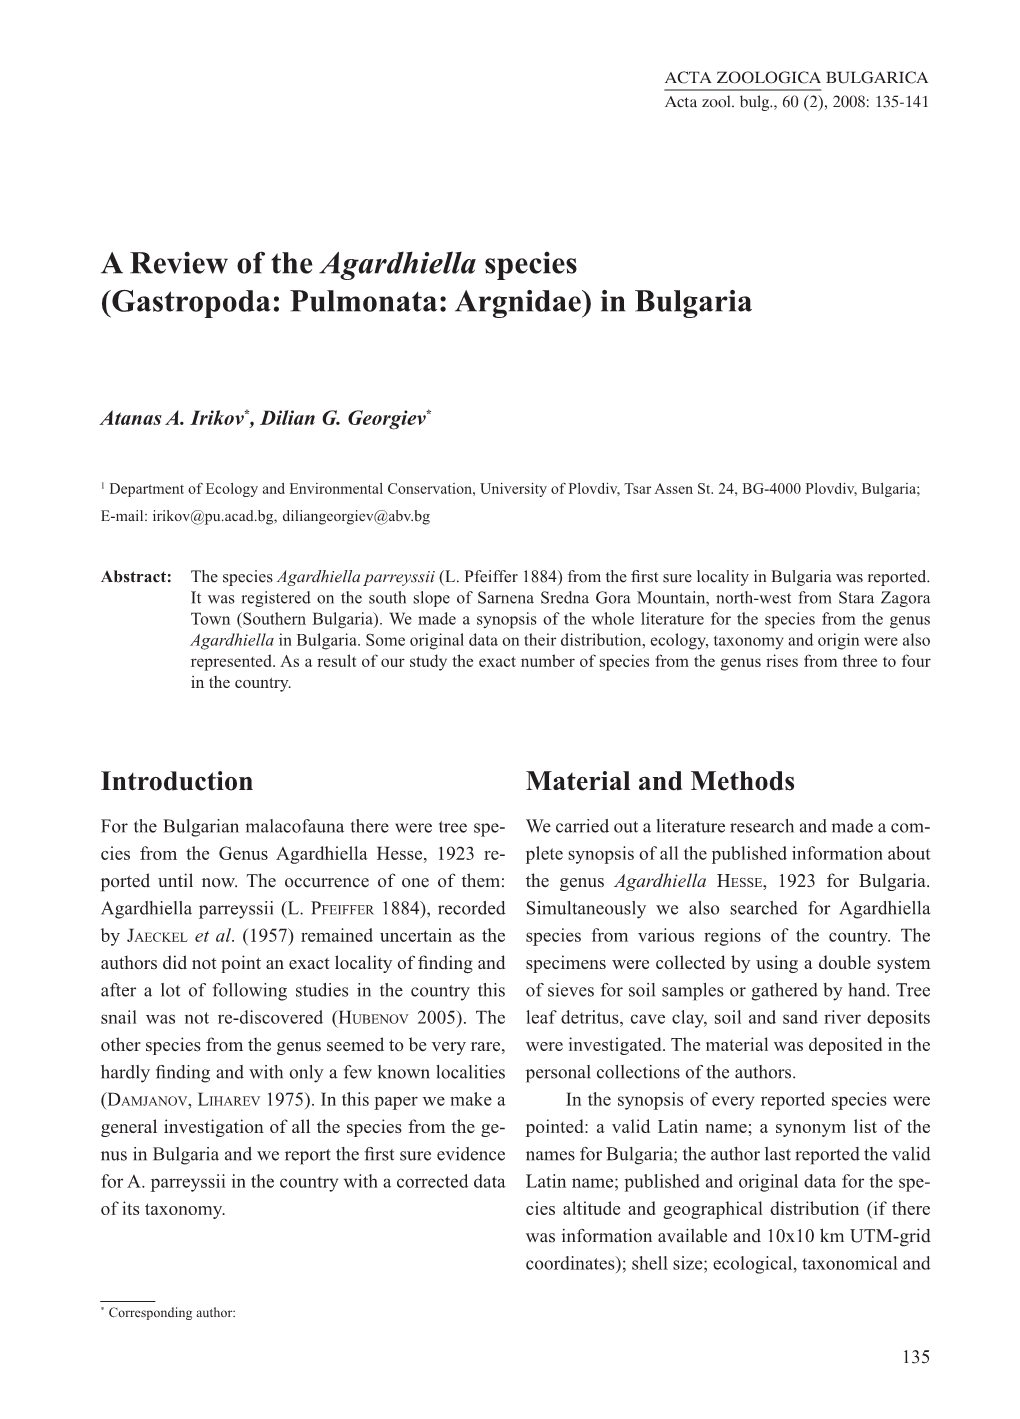 A Review of the Agardhiella Species (Gastropoda: Pulmonata: Argnidae) in Bulgaria